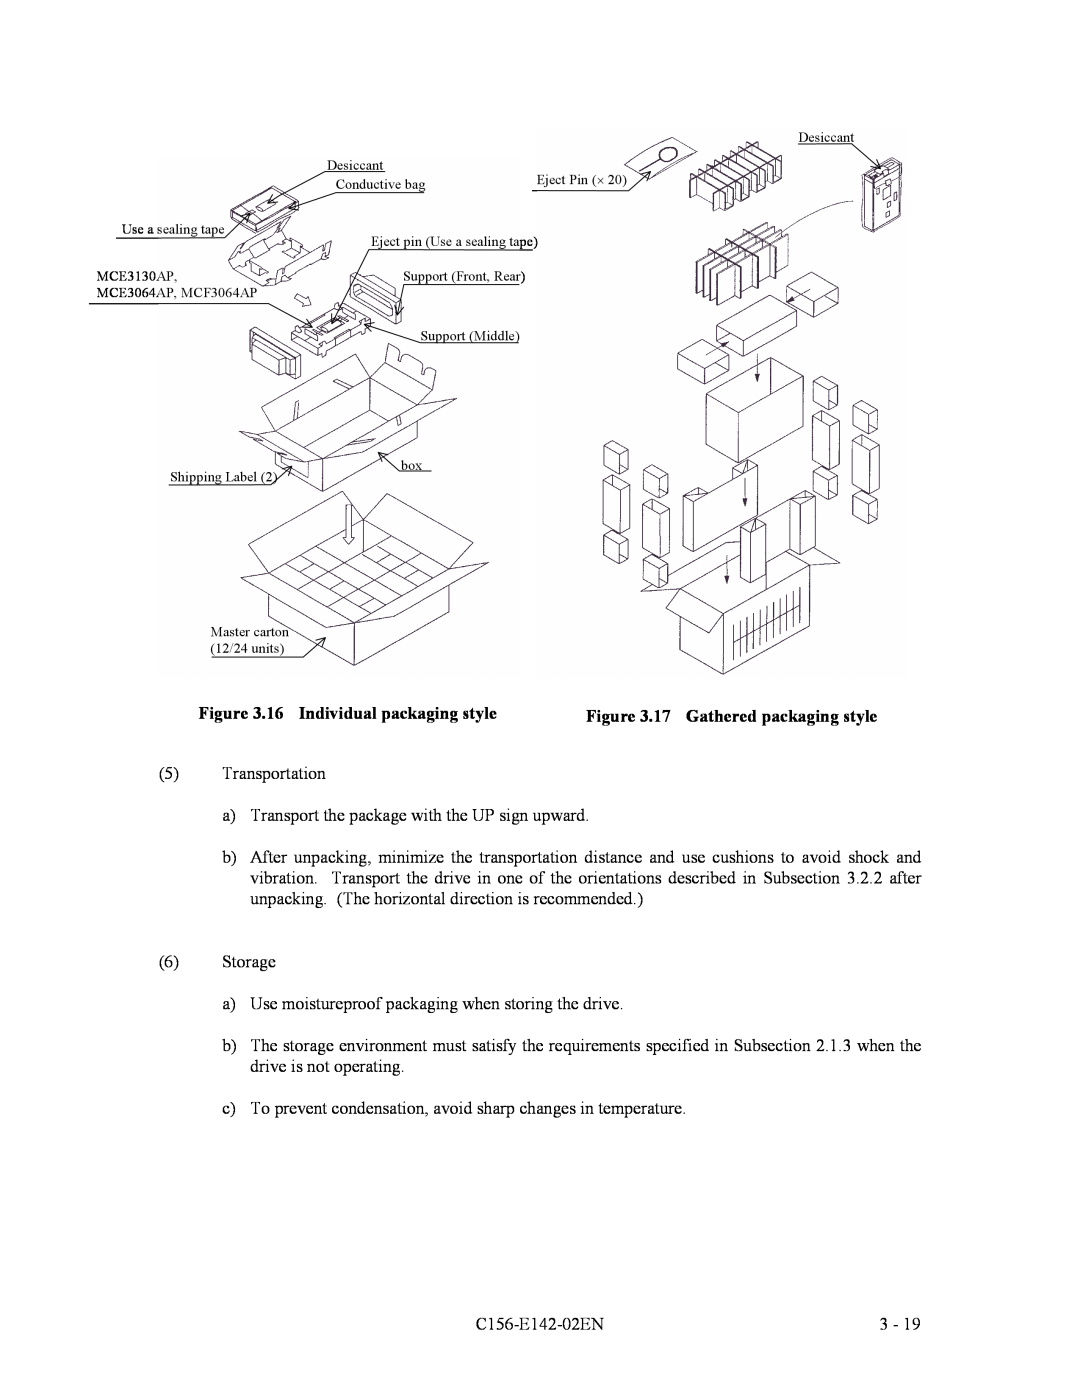 Fujitsu MCE3130AP manual 16 Individual packaging style, 17 Gathered packaging style, Eject Pin %, Master carton 12/24 units 